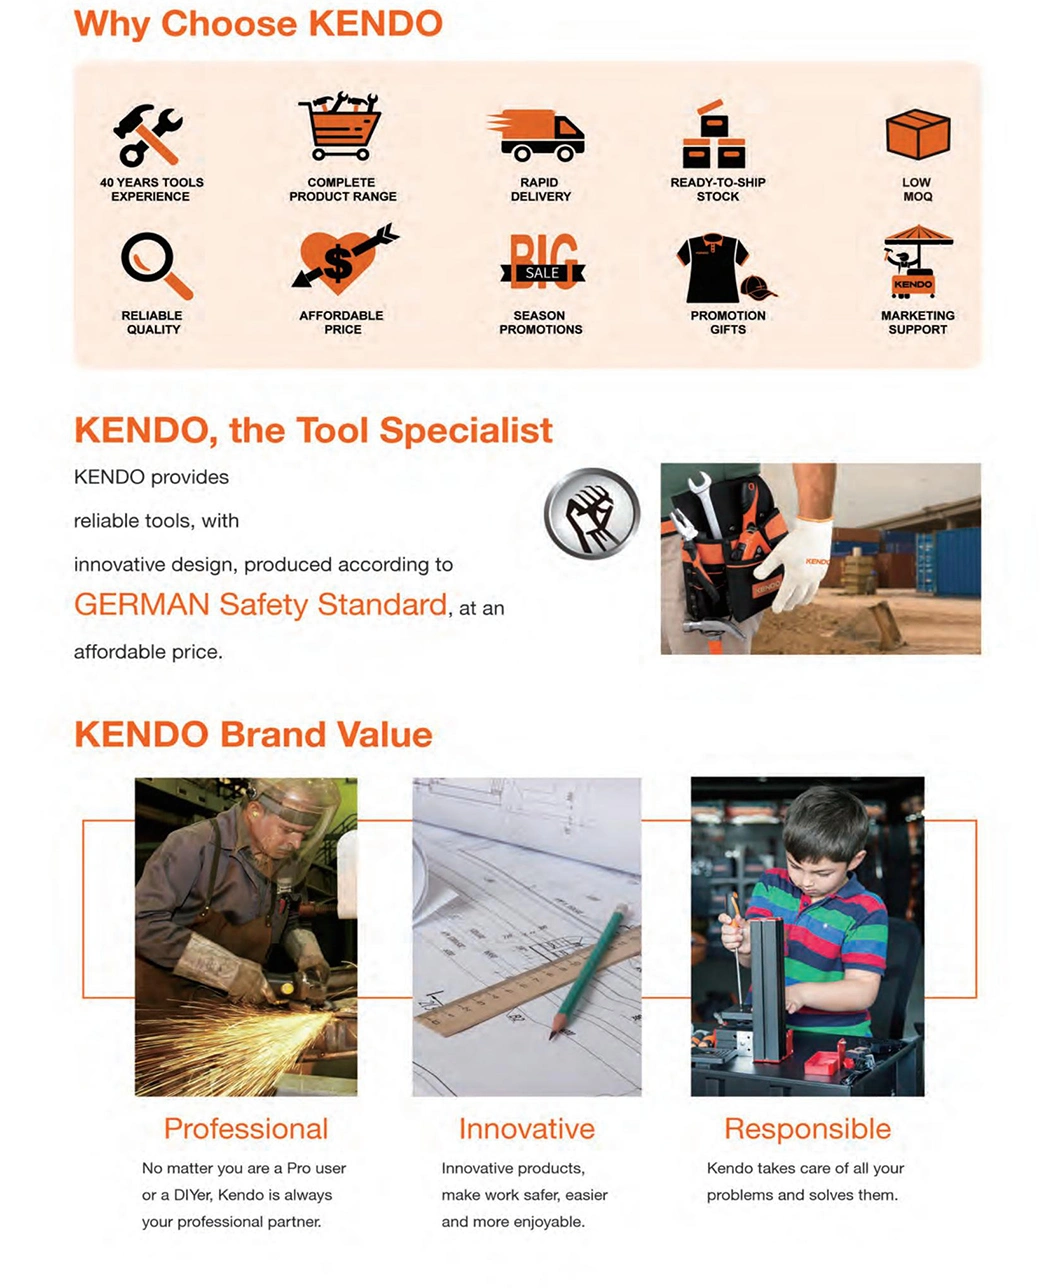 Kendo 3m Steel Construction Tape Measure Mini Waterproof Smart Custom Measuring Tape